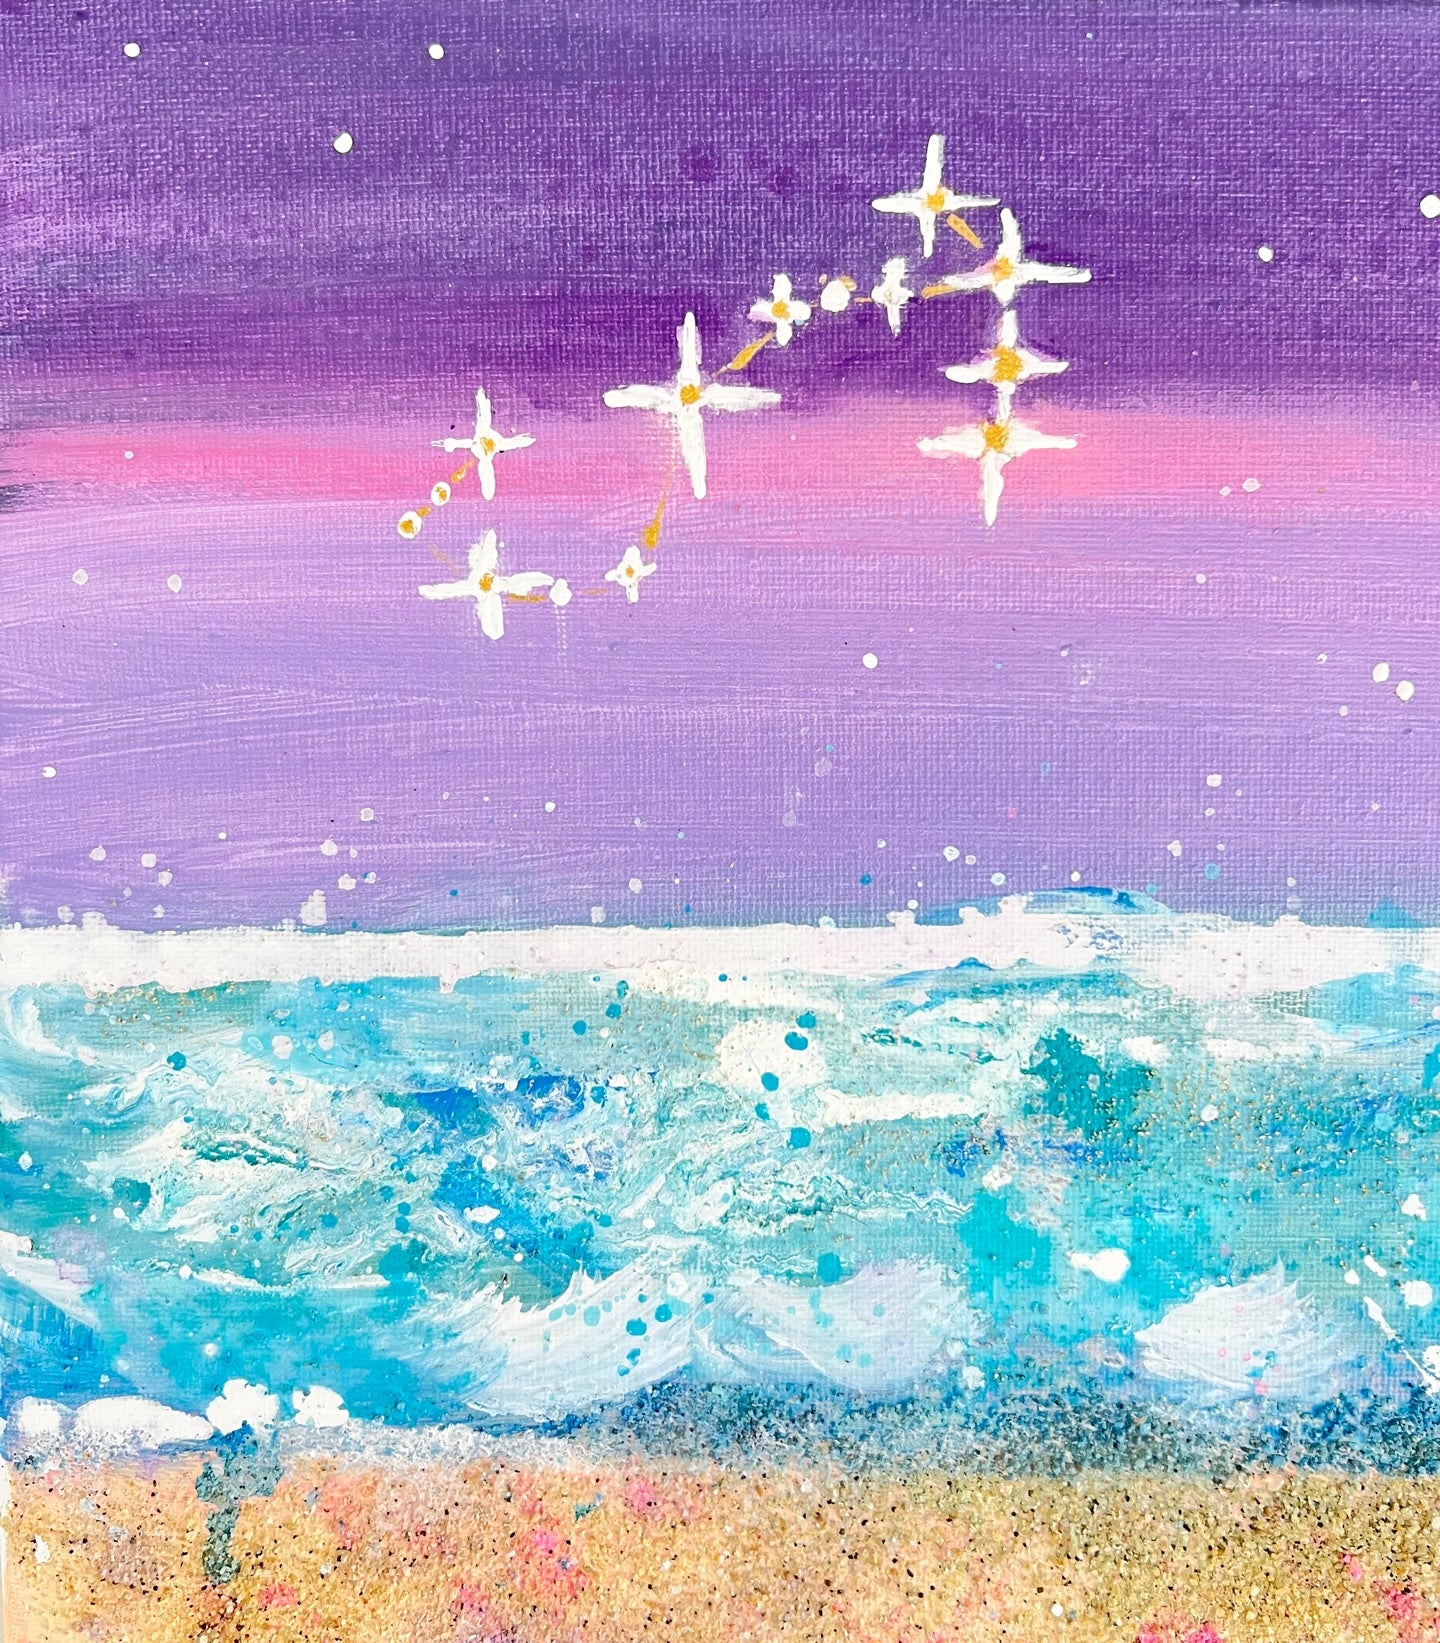 Scorpio in the Stars Dreamscape Painting